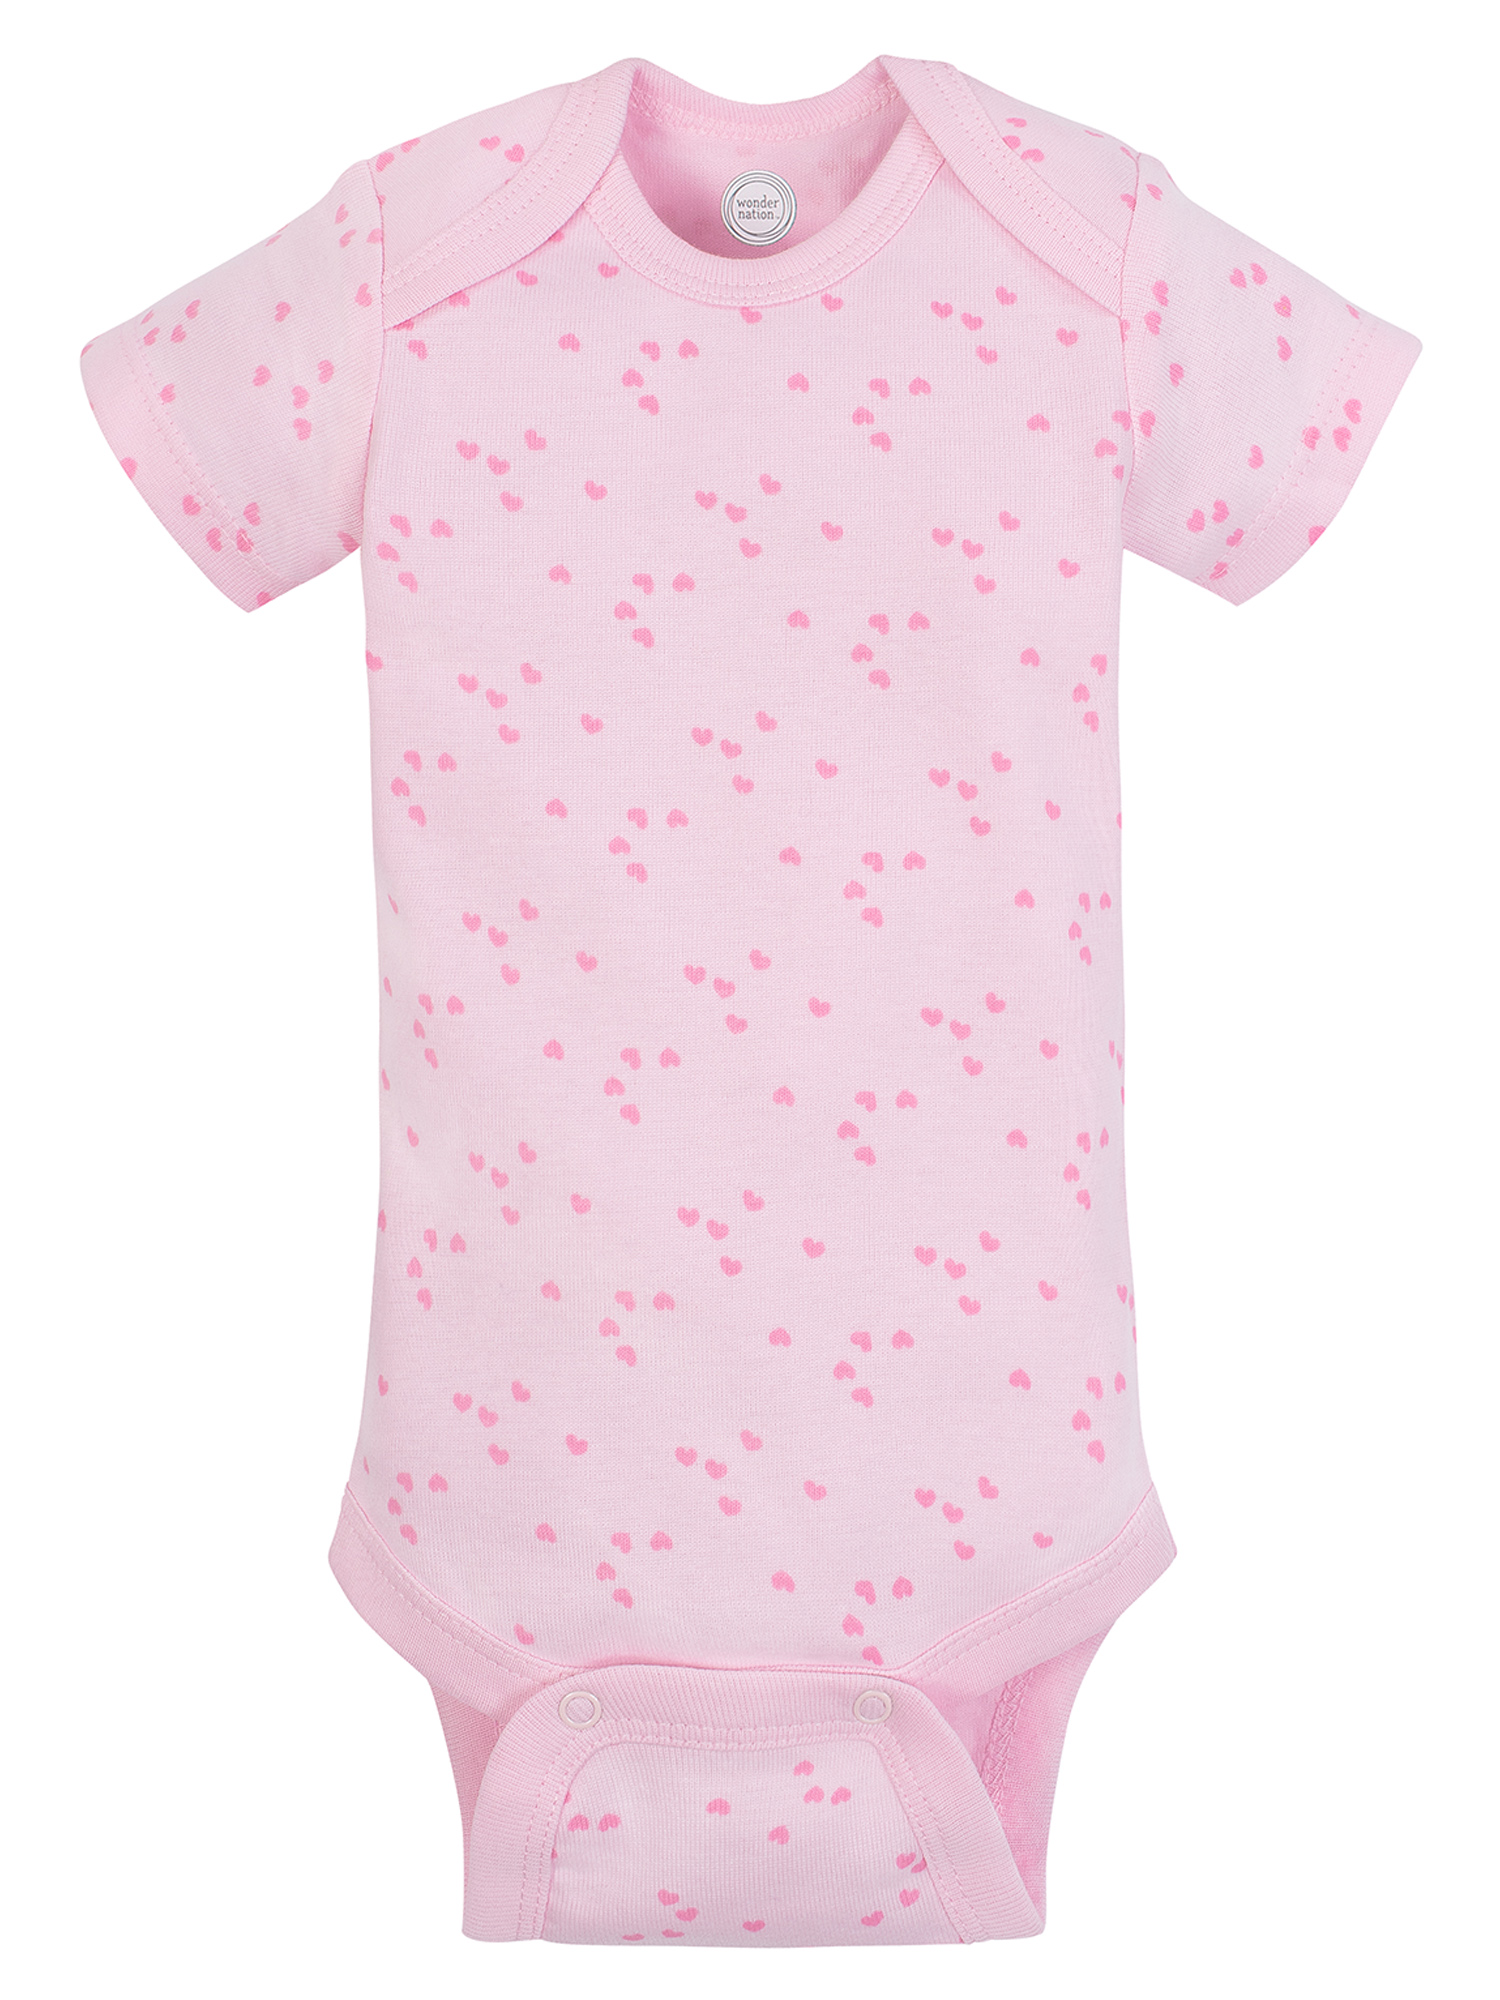 Short Sleeve Bodysuits, 6pk (Baby Girl) - image 2 of 6